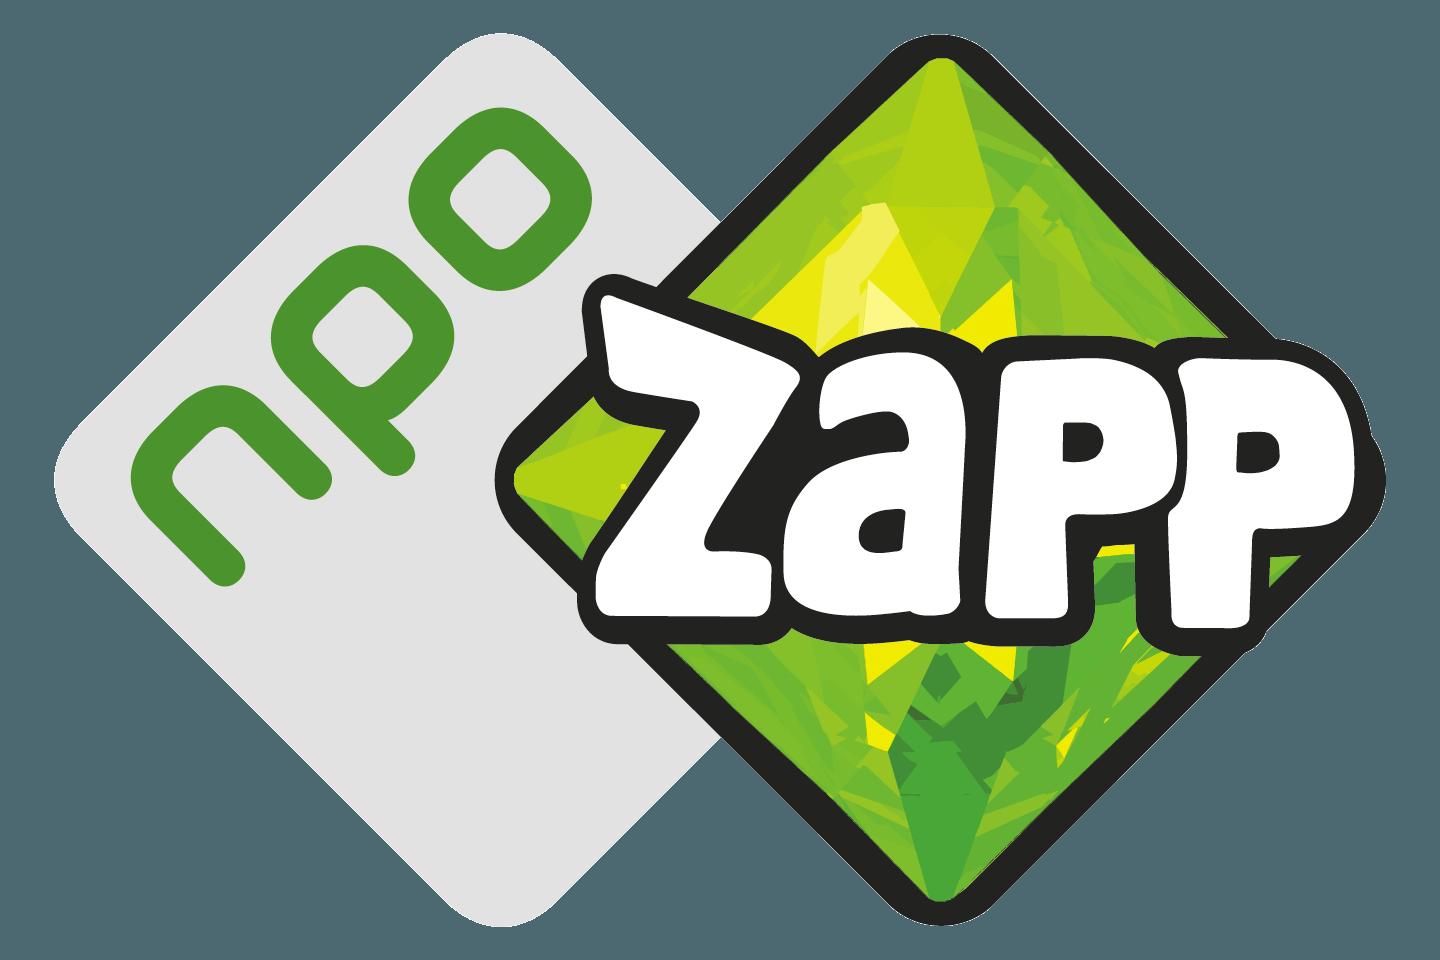 NPO Logo - NPO Zapp logo.png